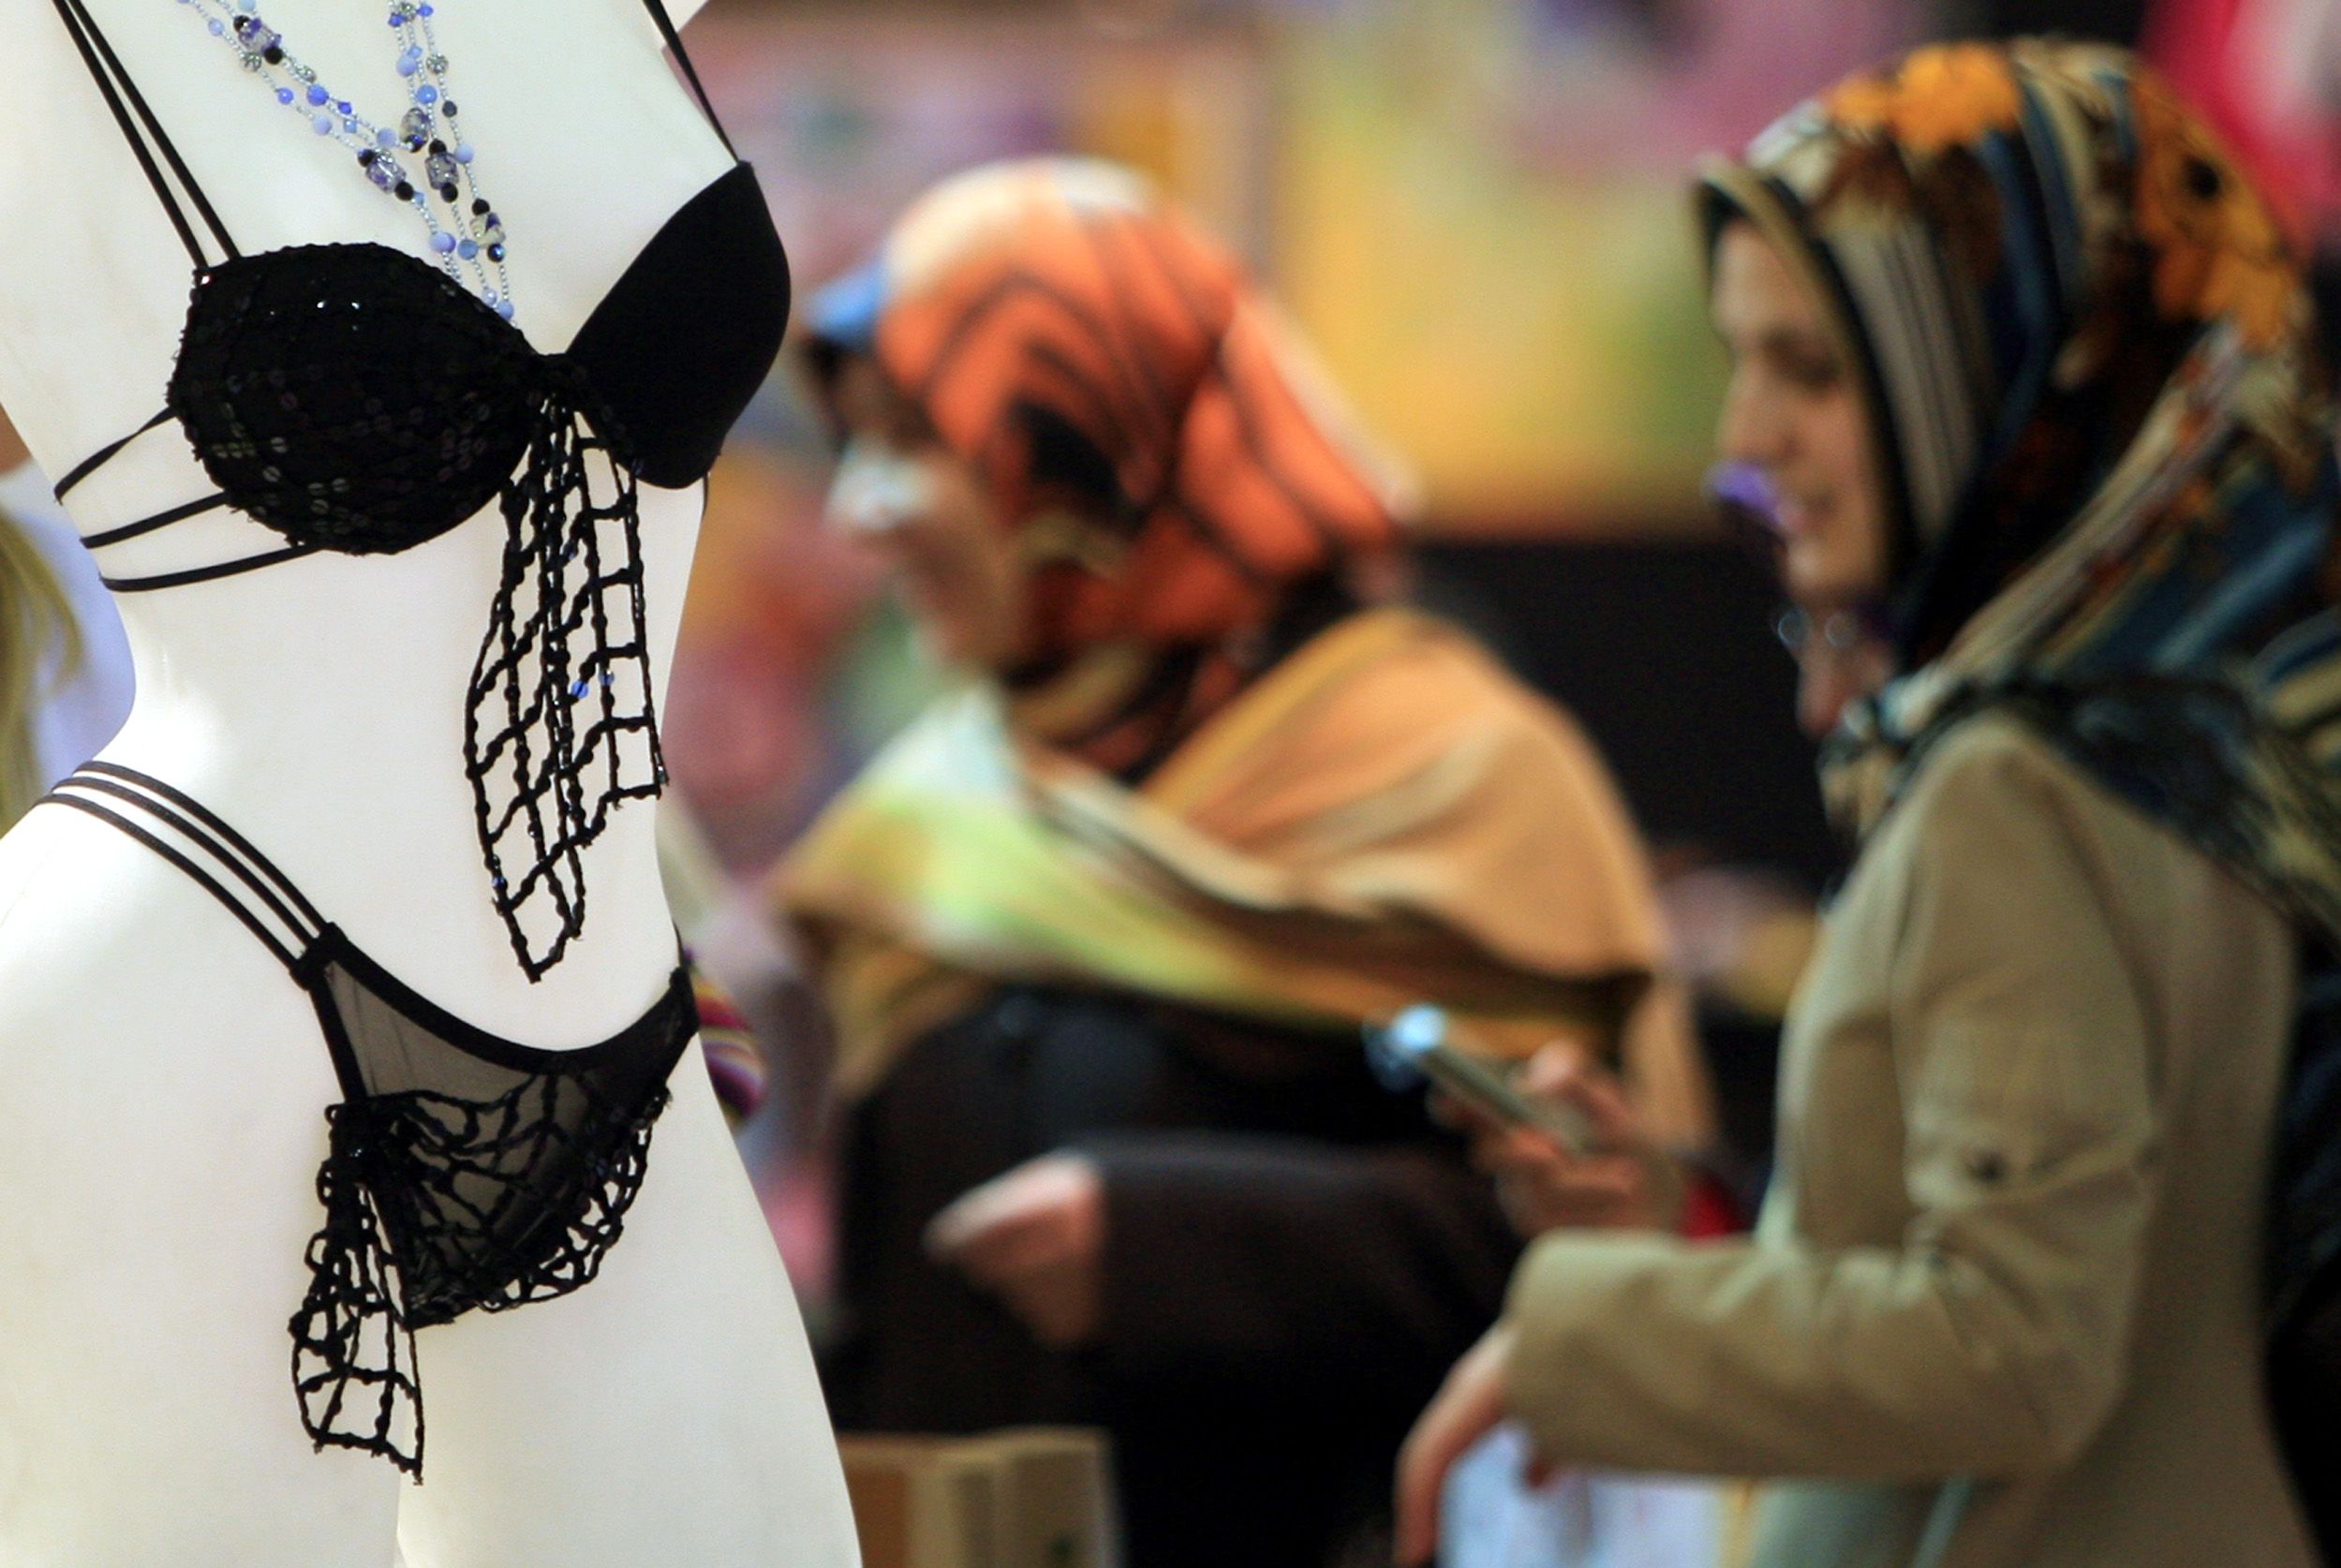 Halal Sex Shop Opening For Muslims In Mecca, Saudi Arabia: Report | IBTimes